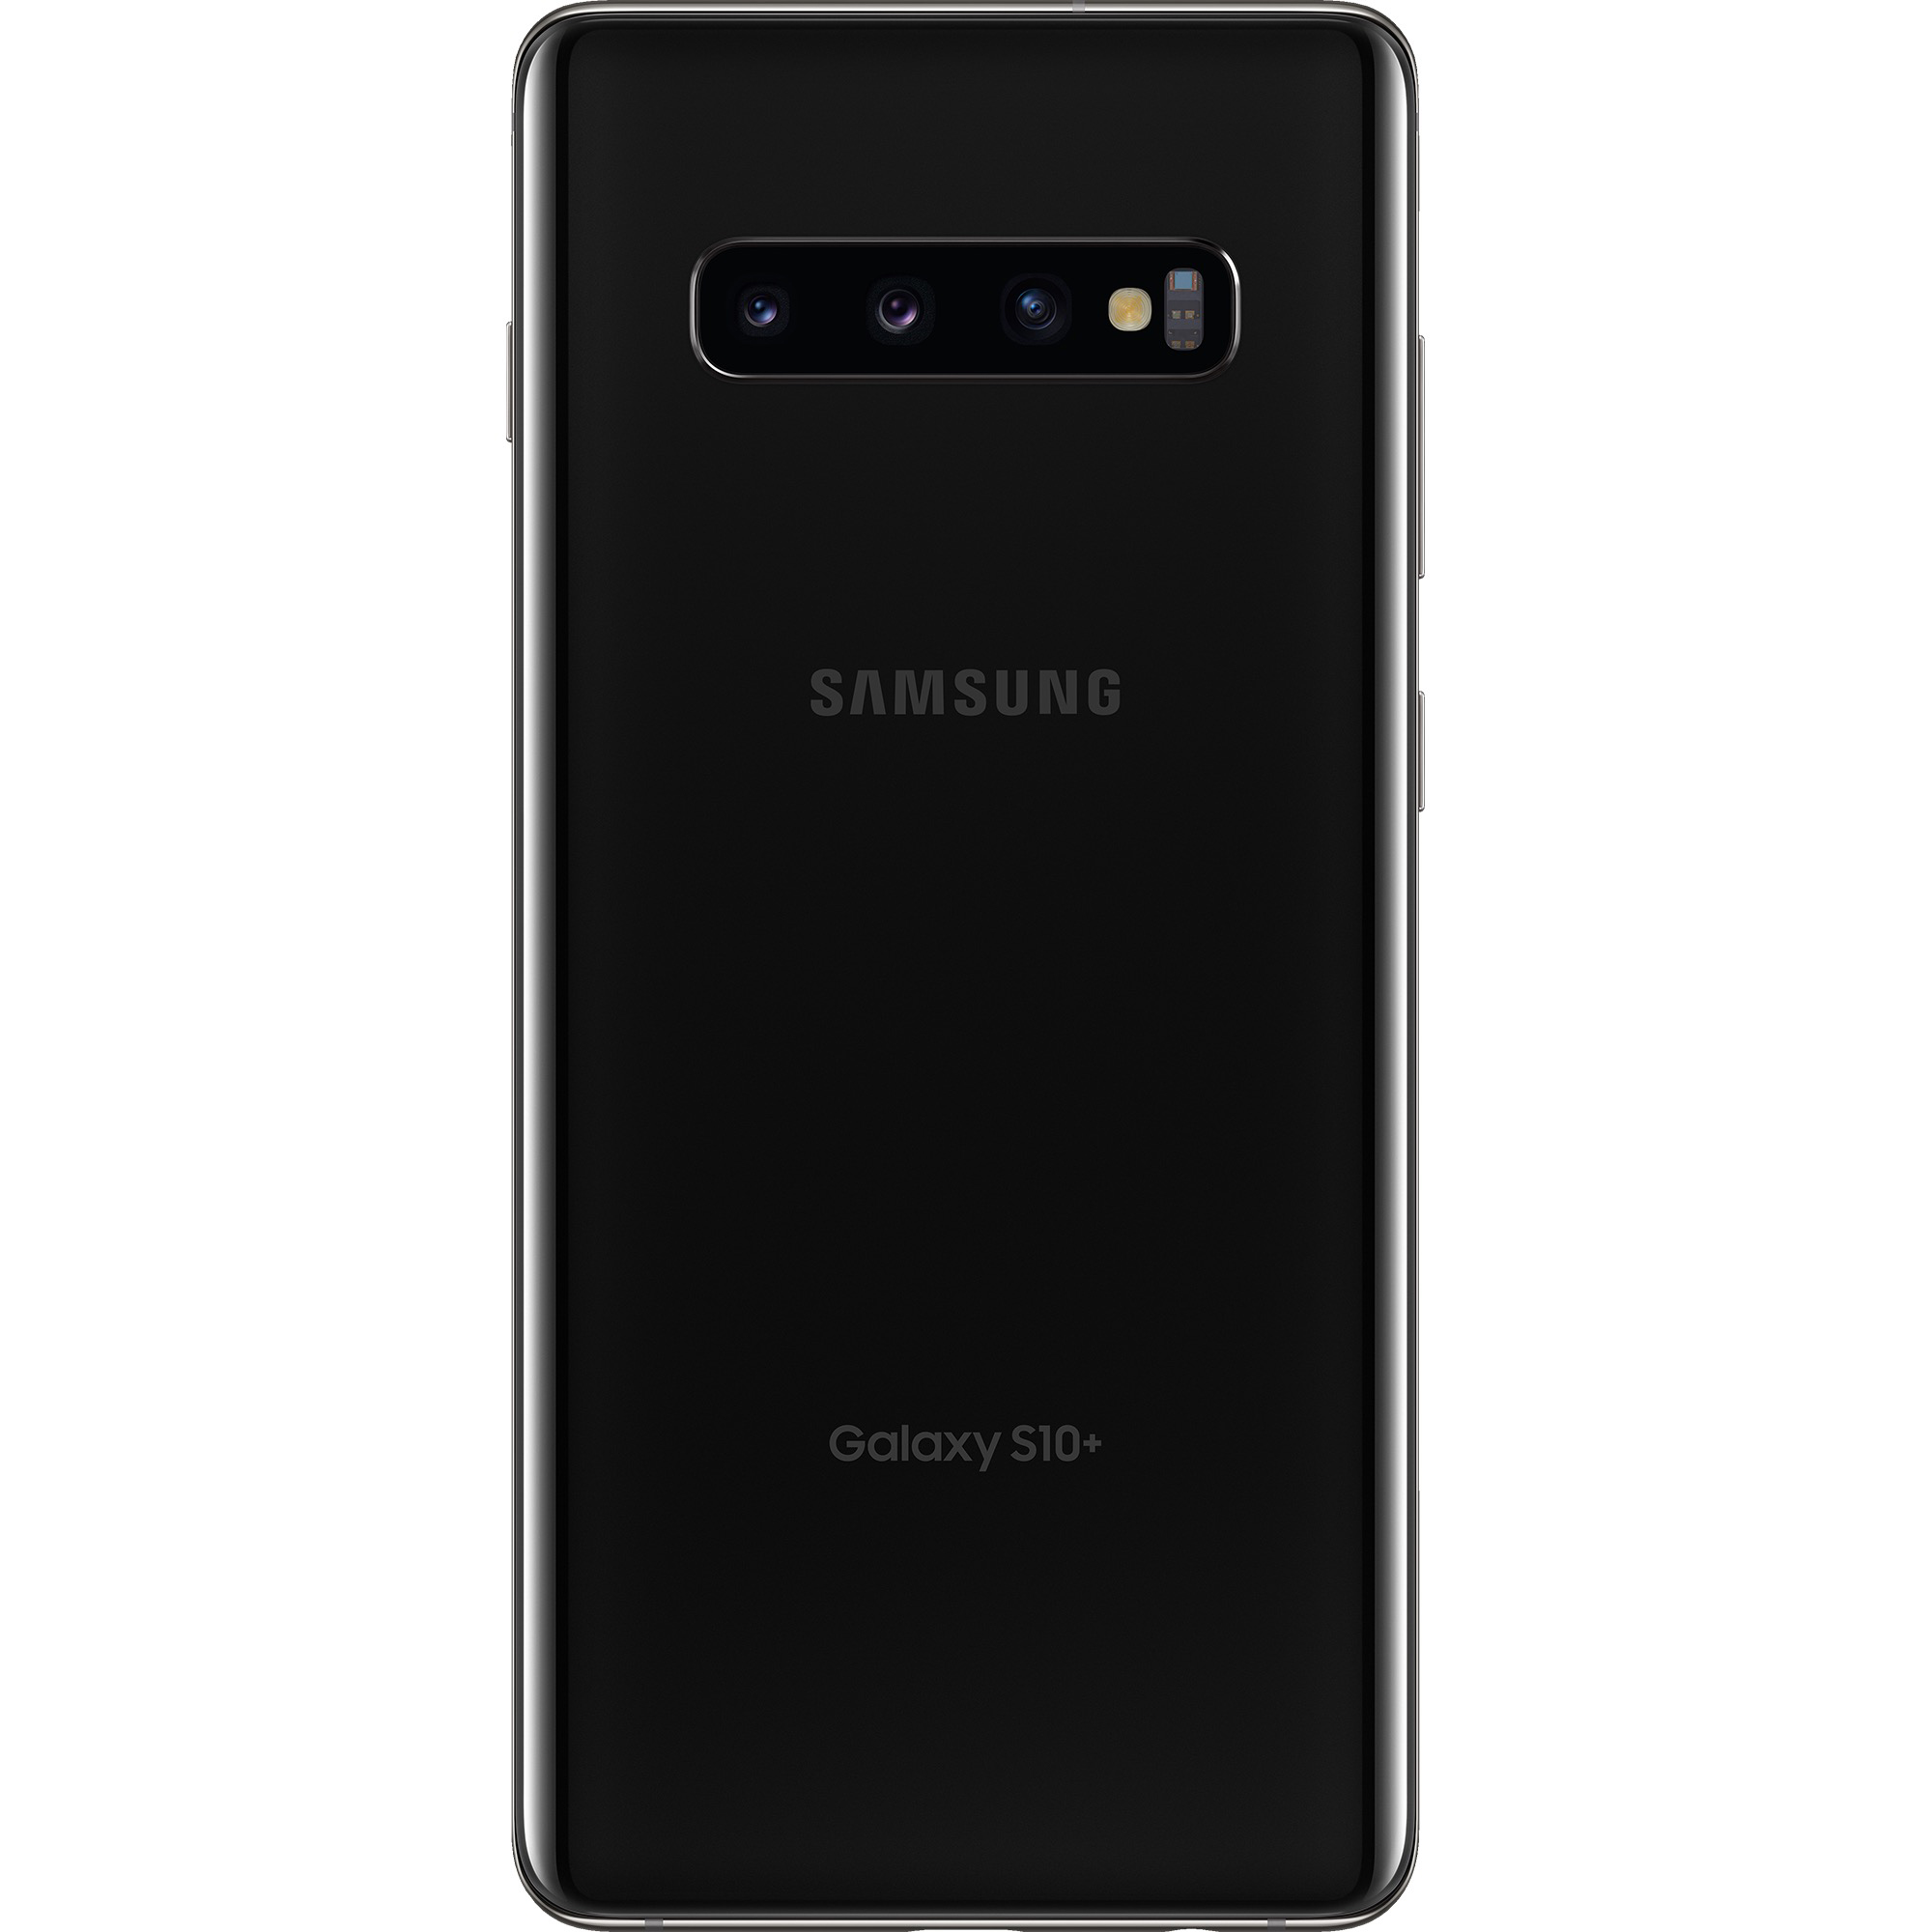 Samsung S10+ 128GB GSM/CDMA Unlocked Phone - Black (Used) + WeCare Alcohol Wipes Pack (50 Wipes) - image 2 of 7